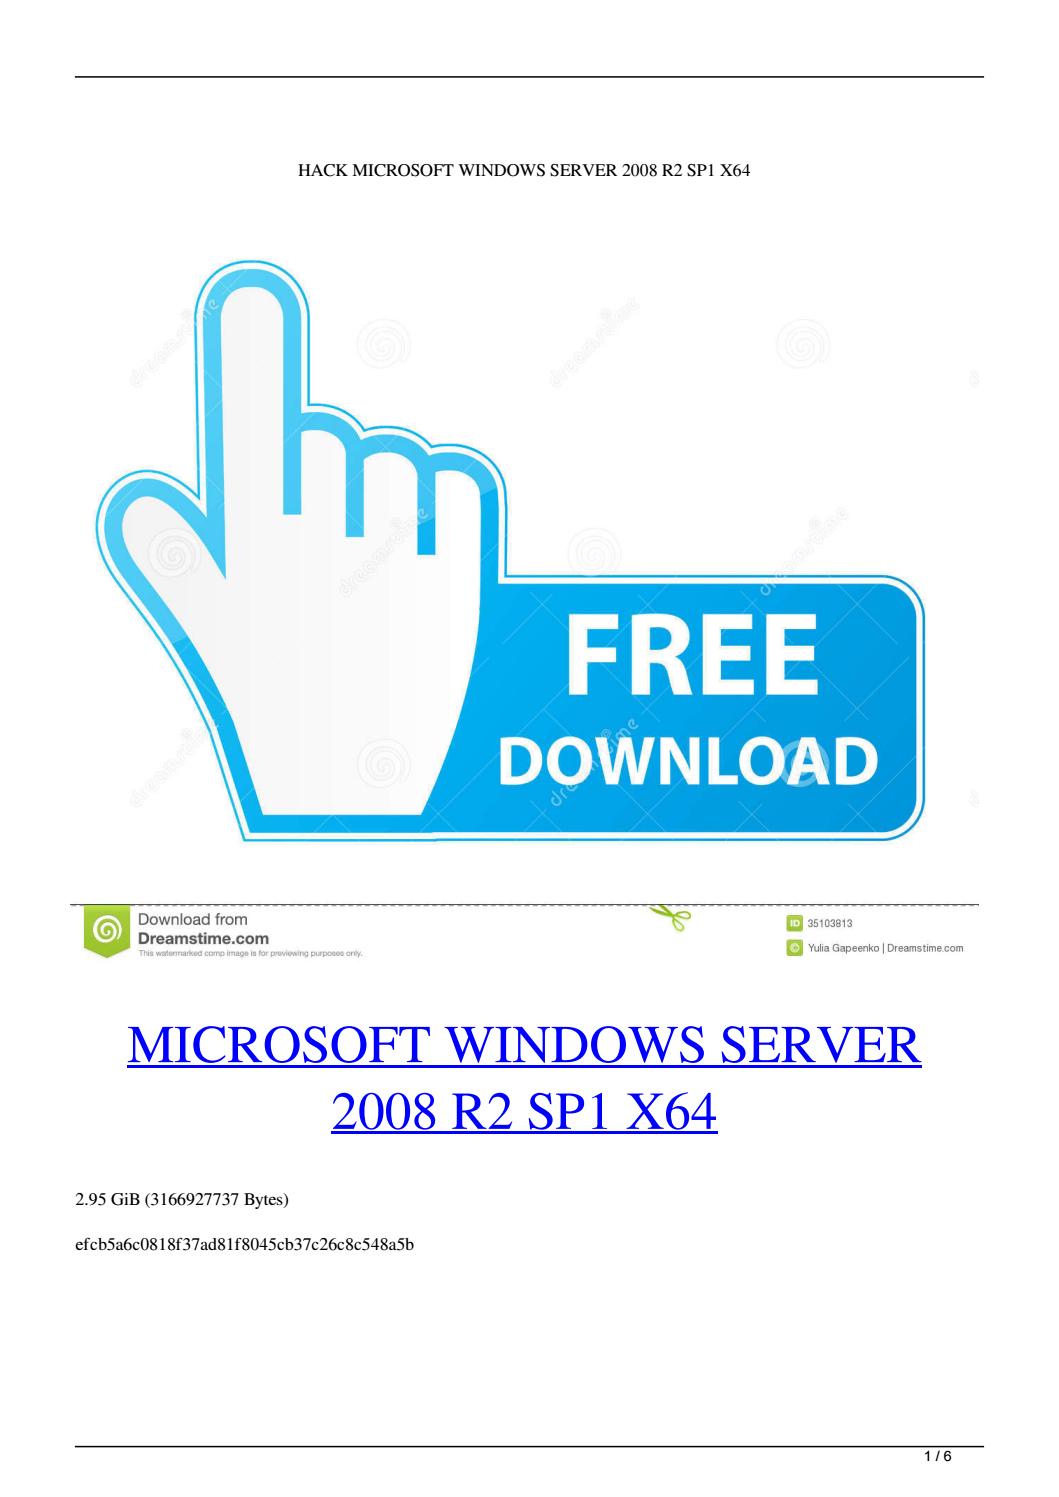 Microsoft windows wlan autoconfig service server 2008 r2 download